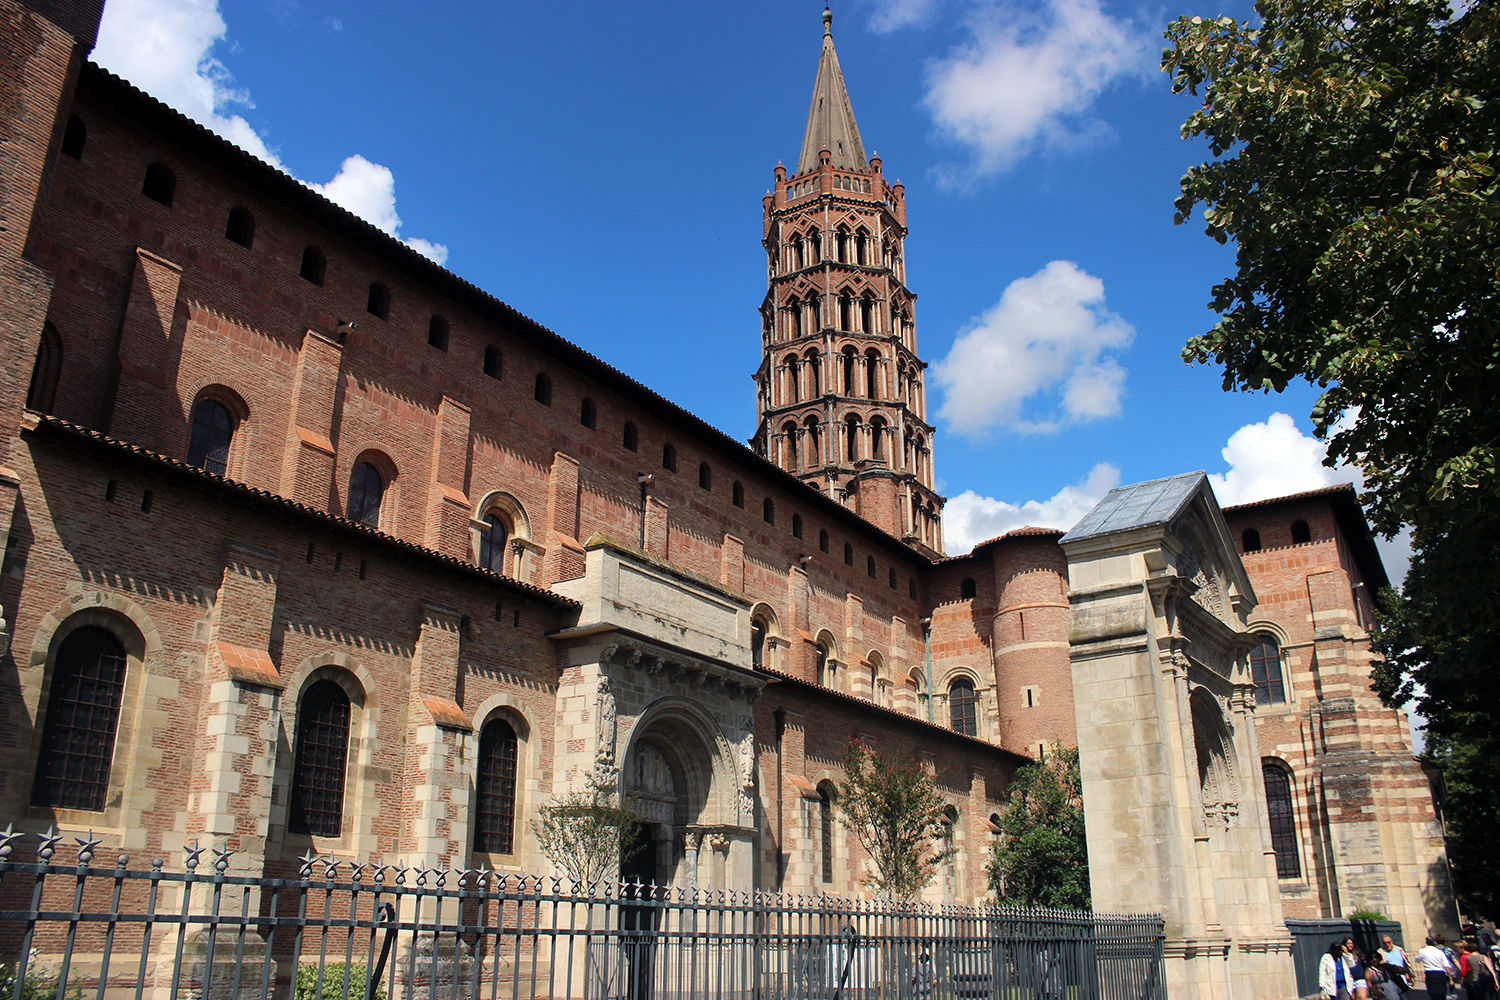 Basilica of Saint-Sernin, Toulouse, France, bell tower c. 1270-1470 (photo: Guimsou, CC BY-SA 3.0)